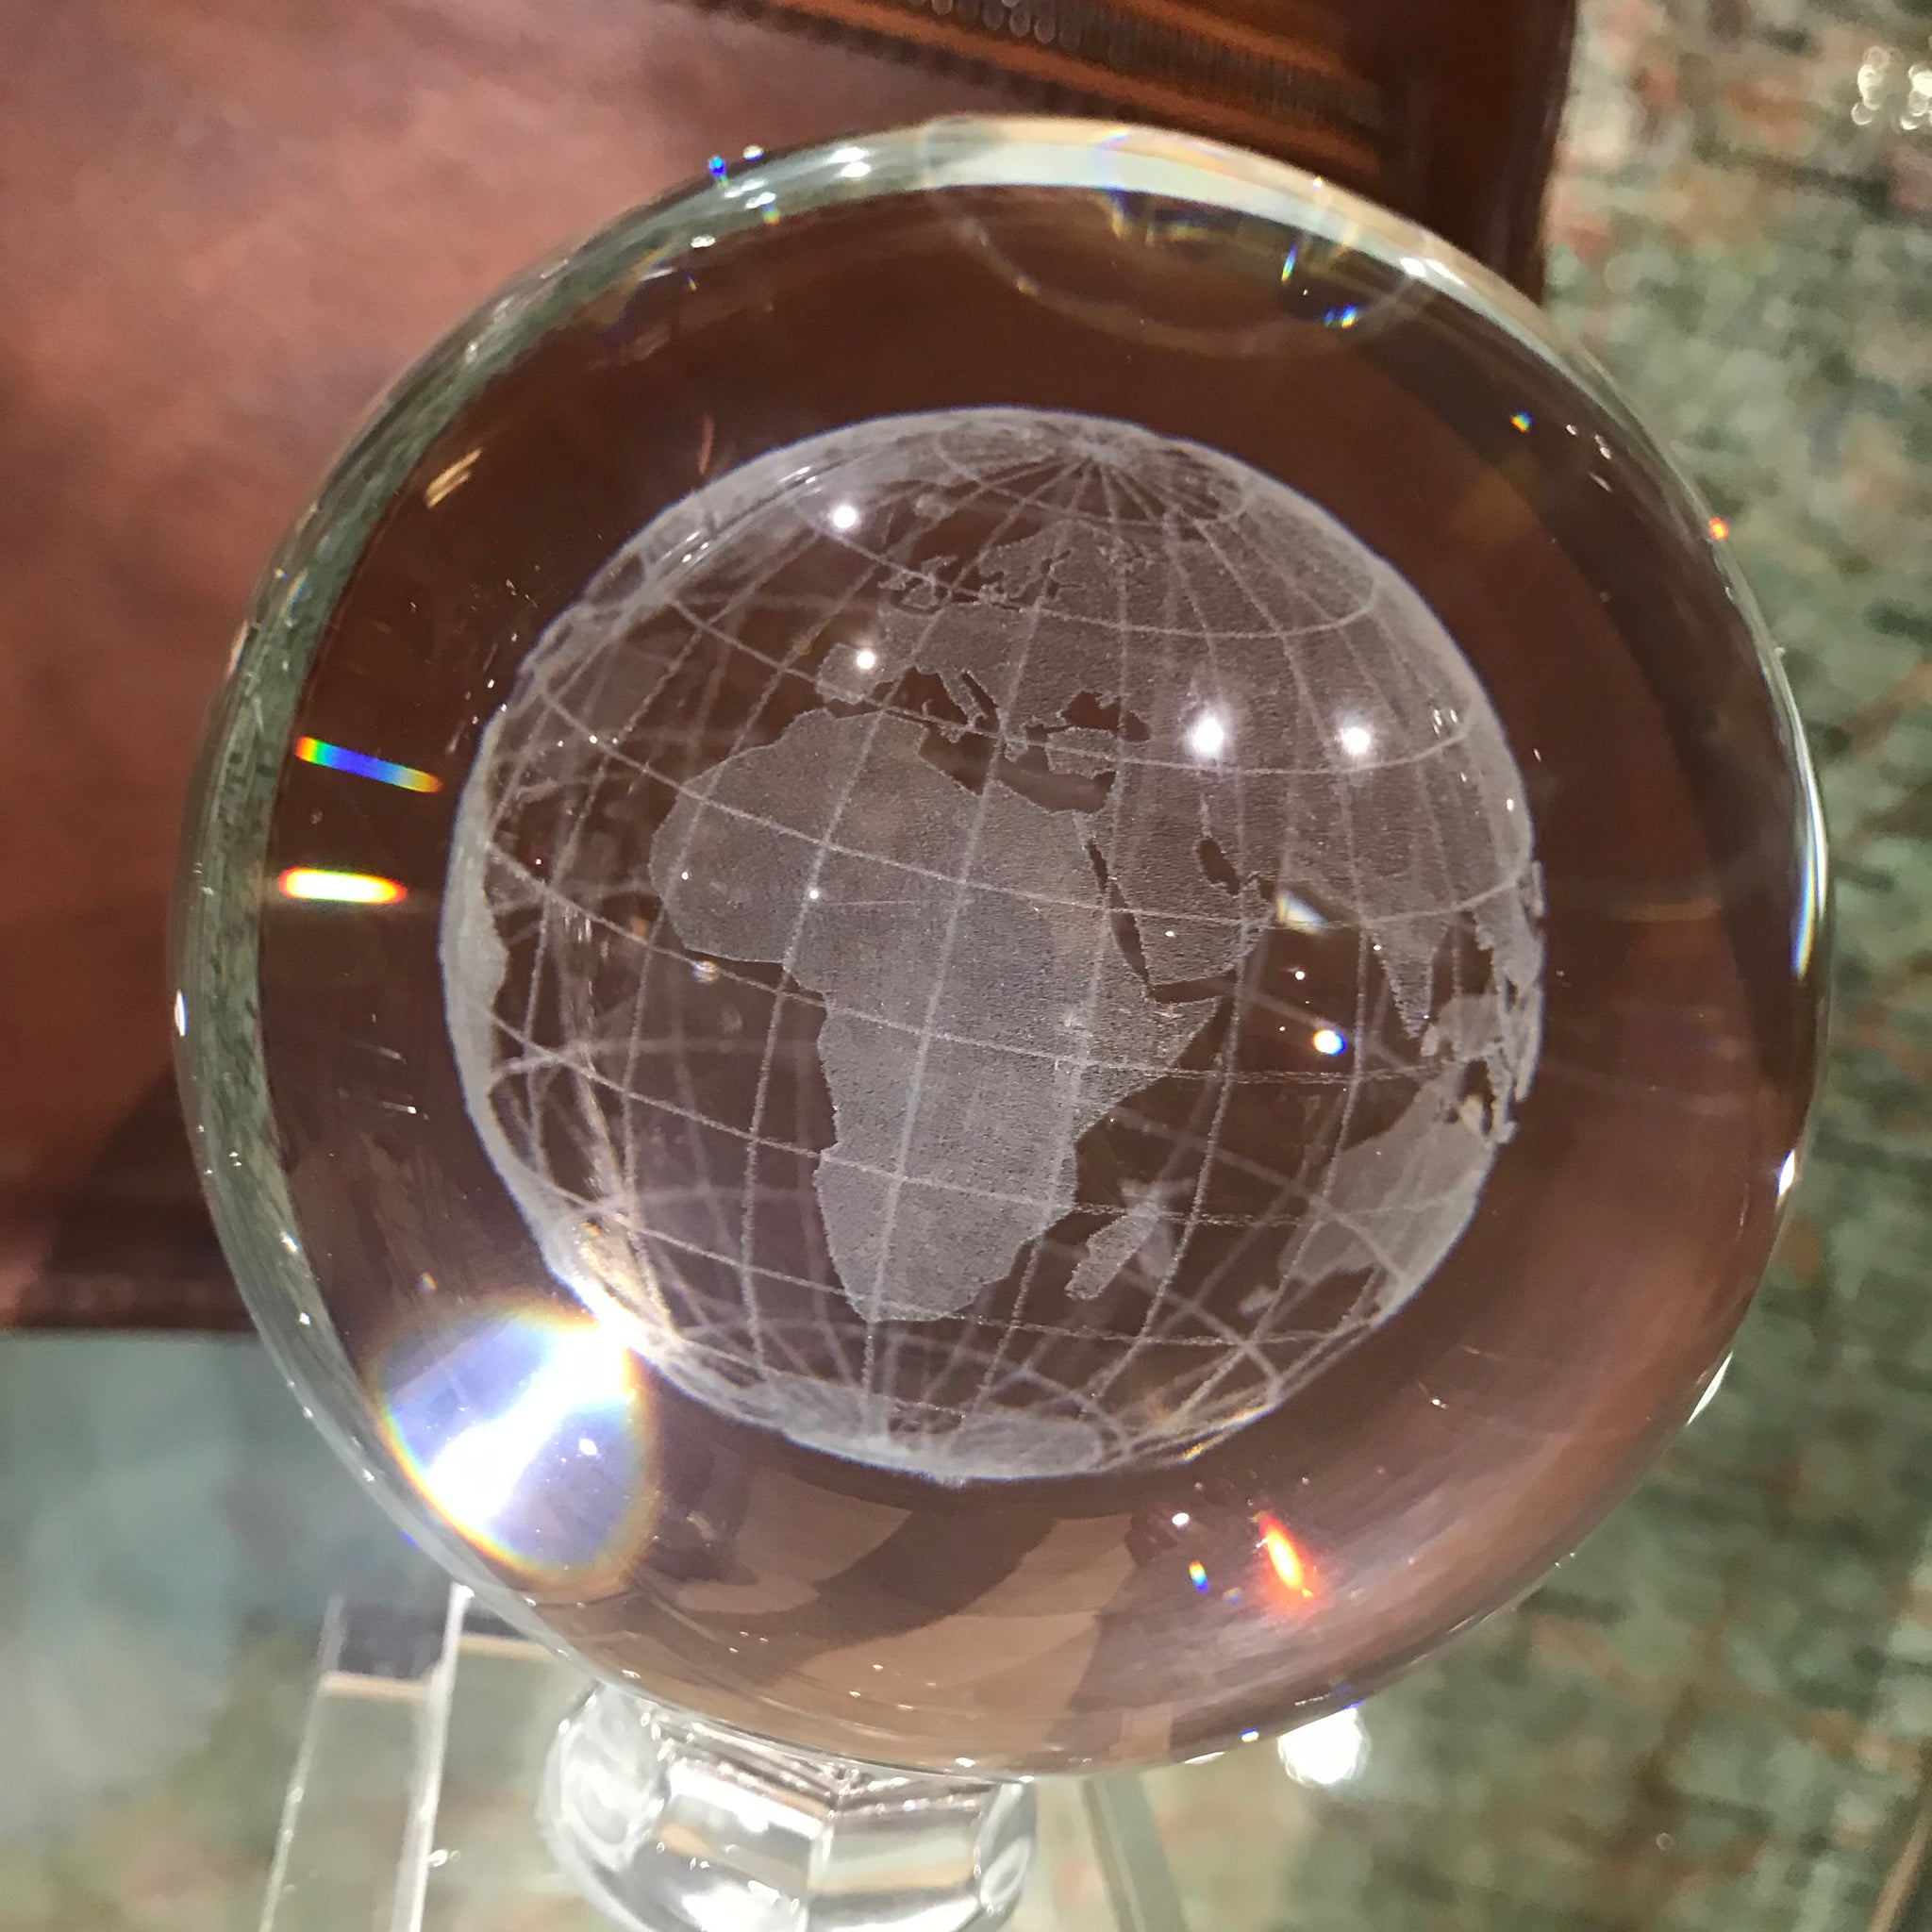 Crystal glass globe on foot